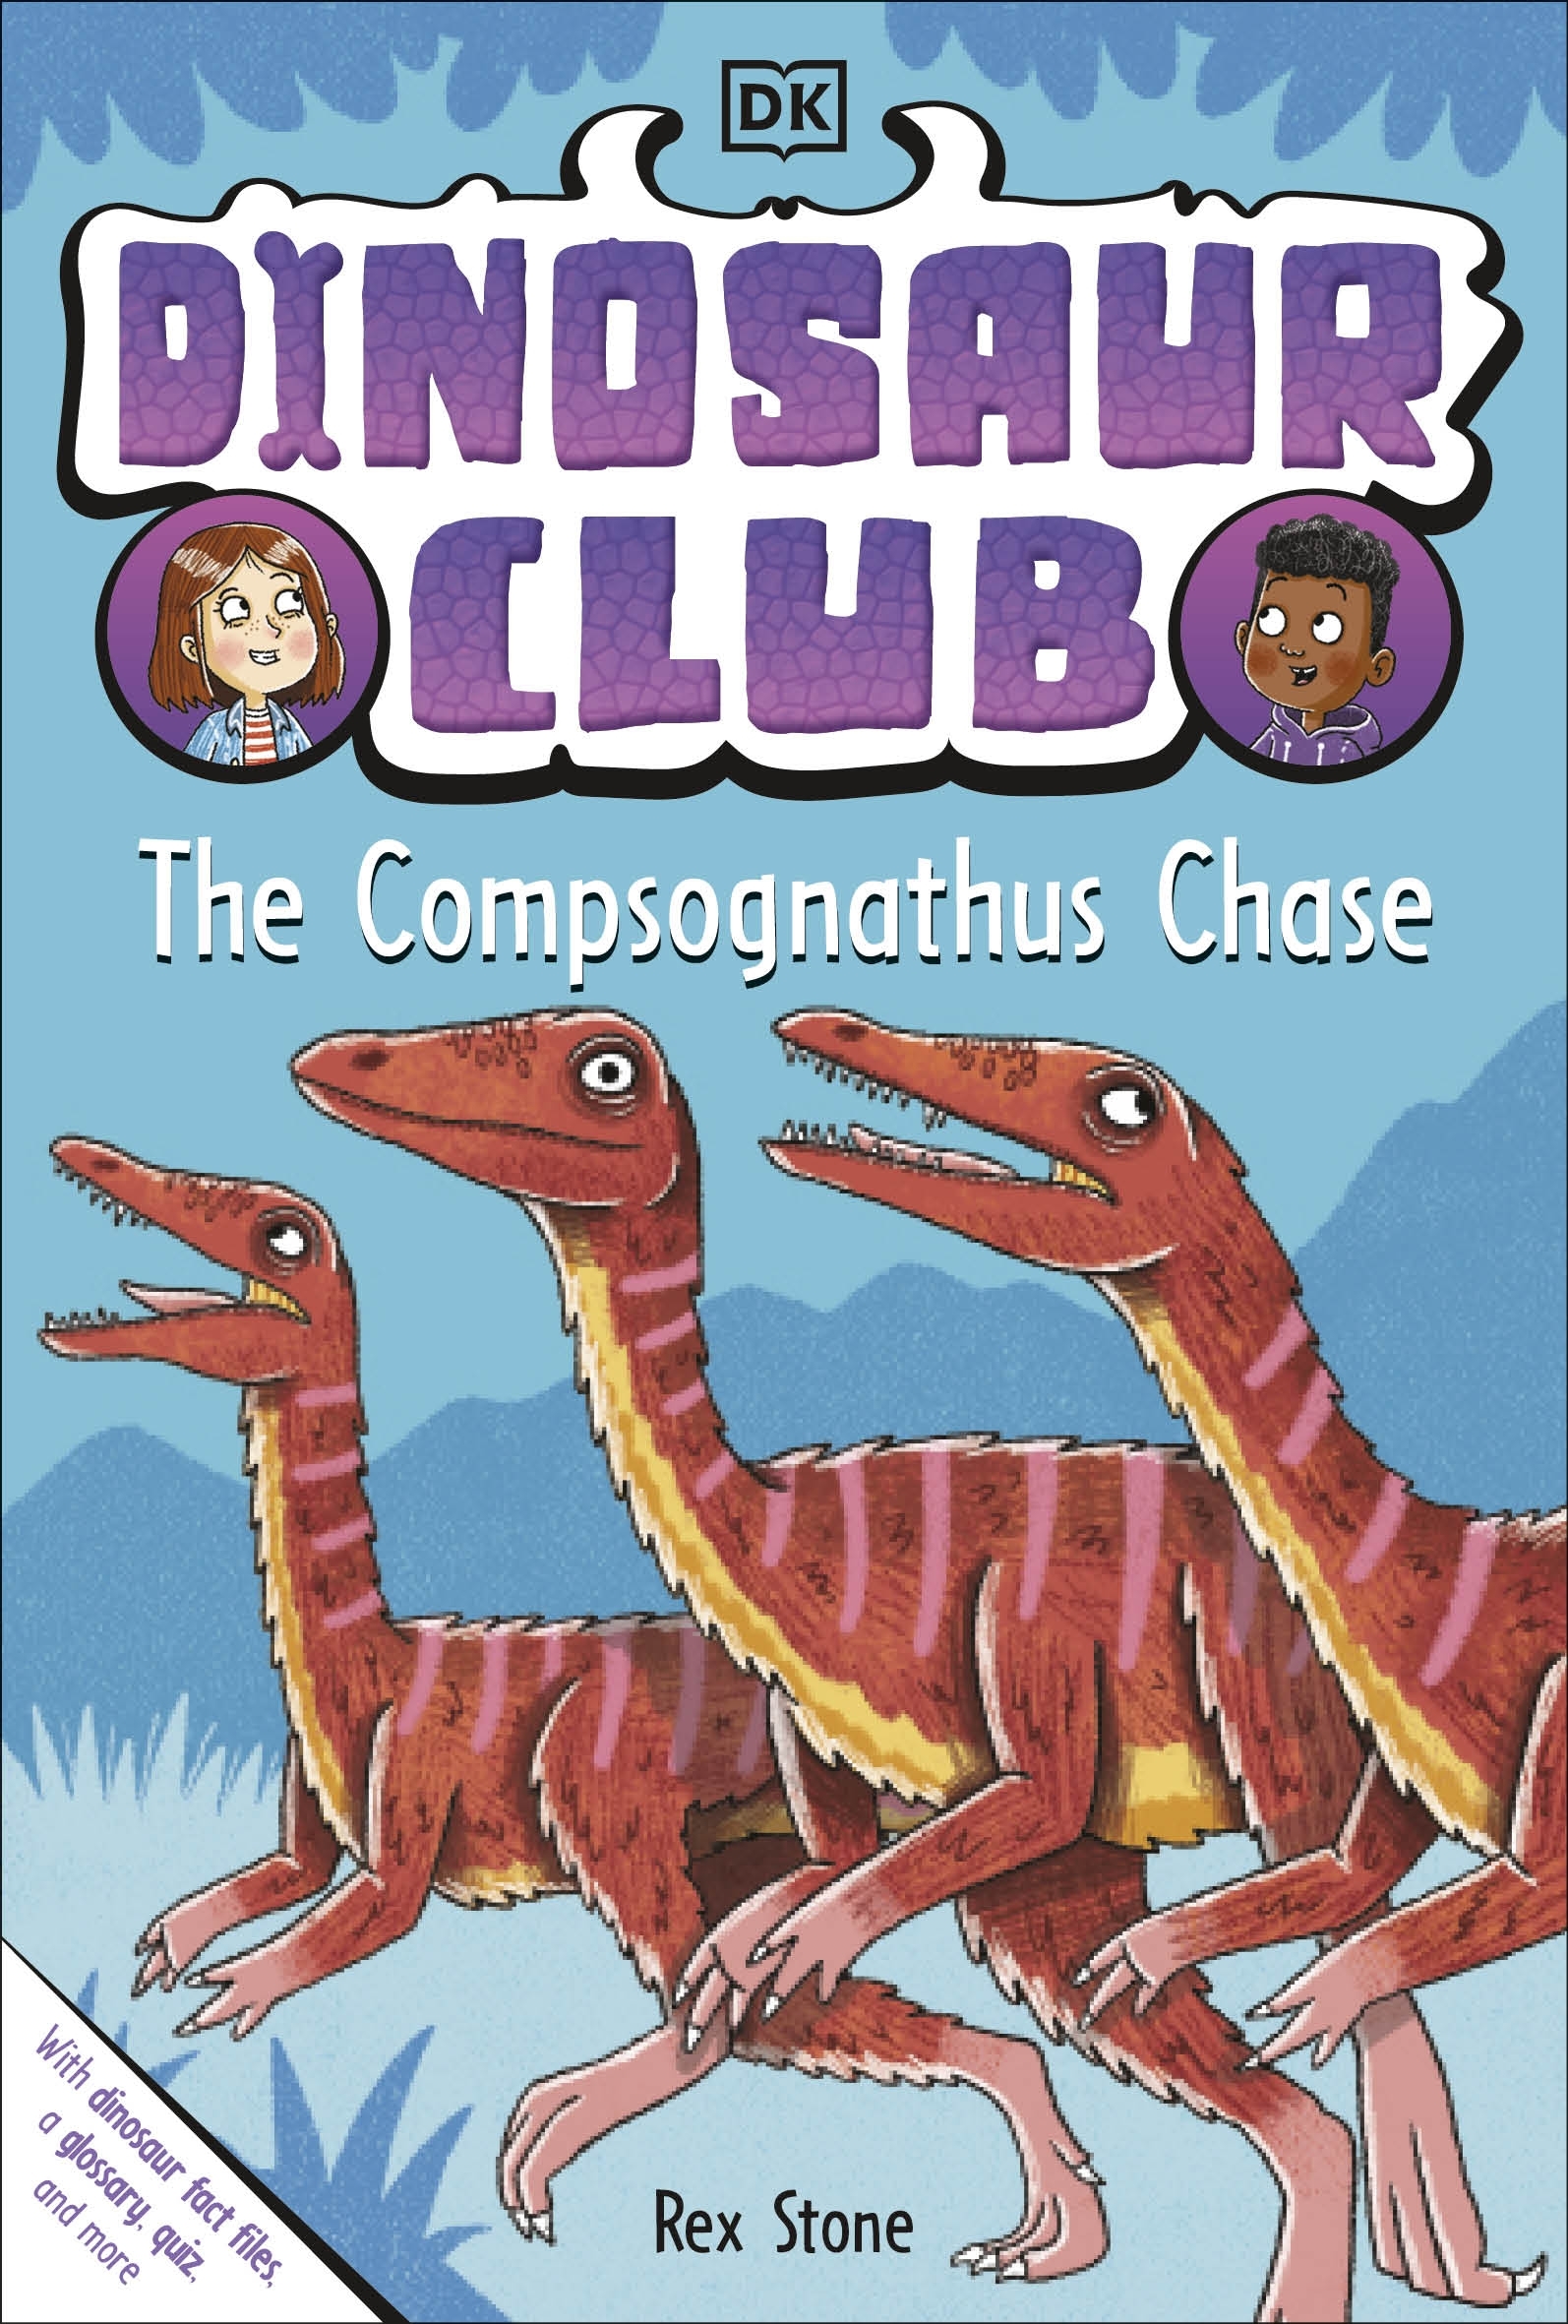 Dinosaur Club: The Compsognathus Chase by DK - Penguin Books Australia